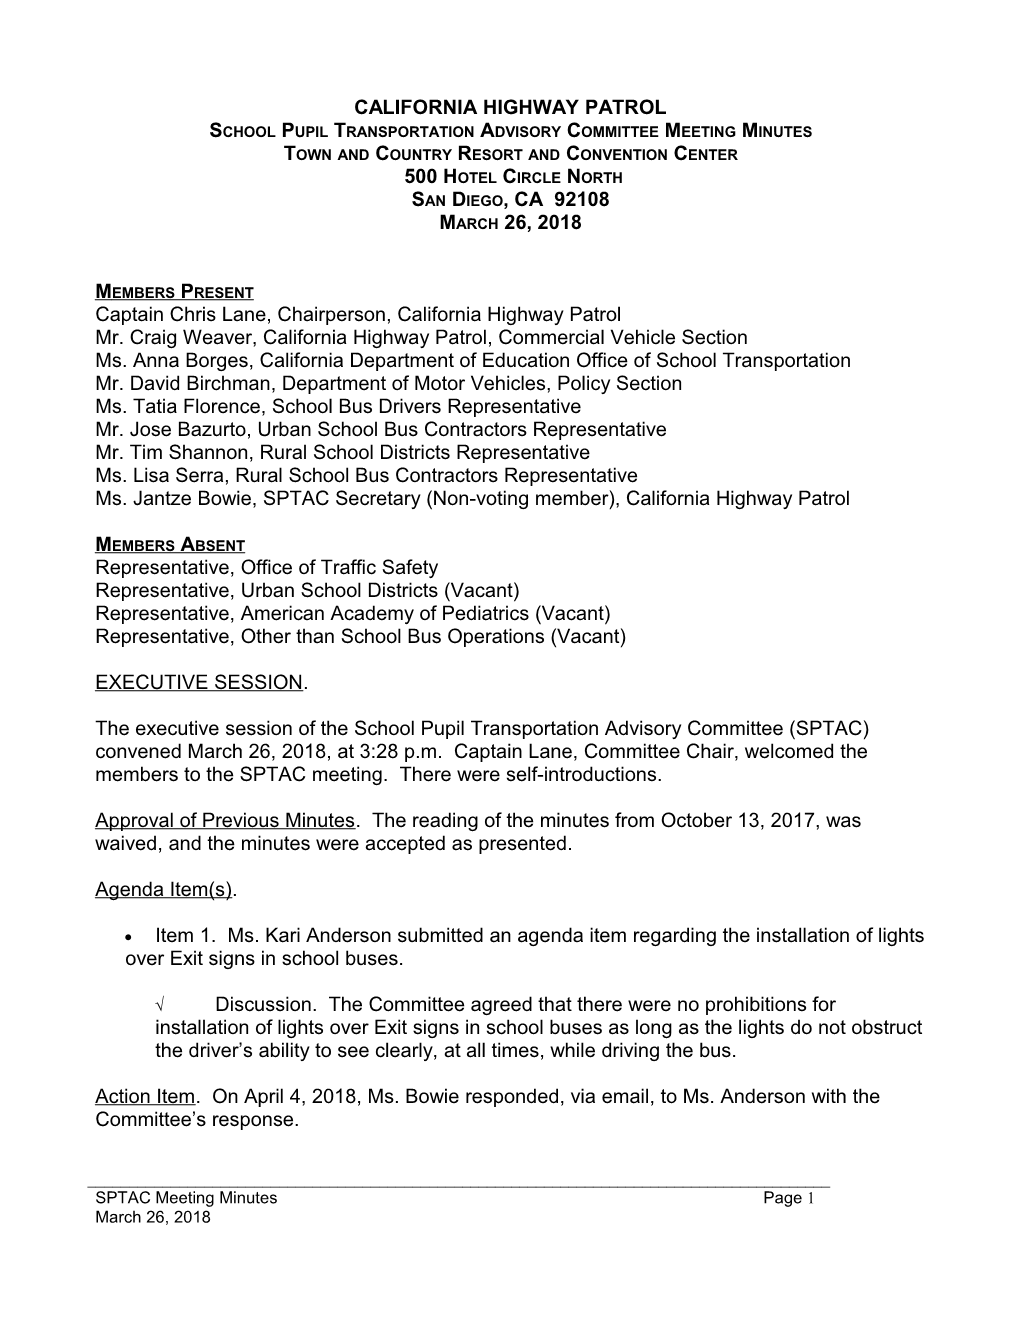 School Pupil Transportation Advisory Committee Meeting Minutes